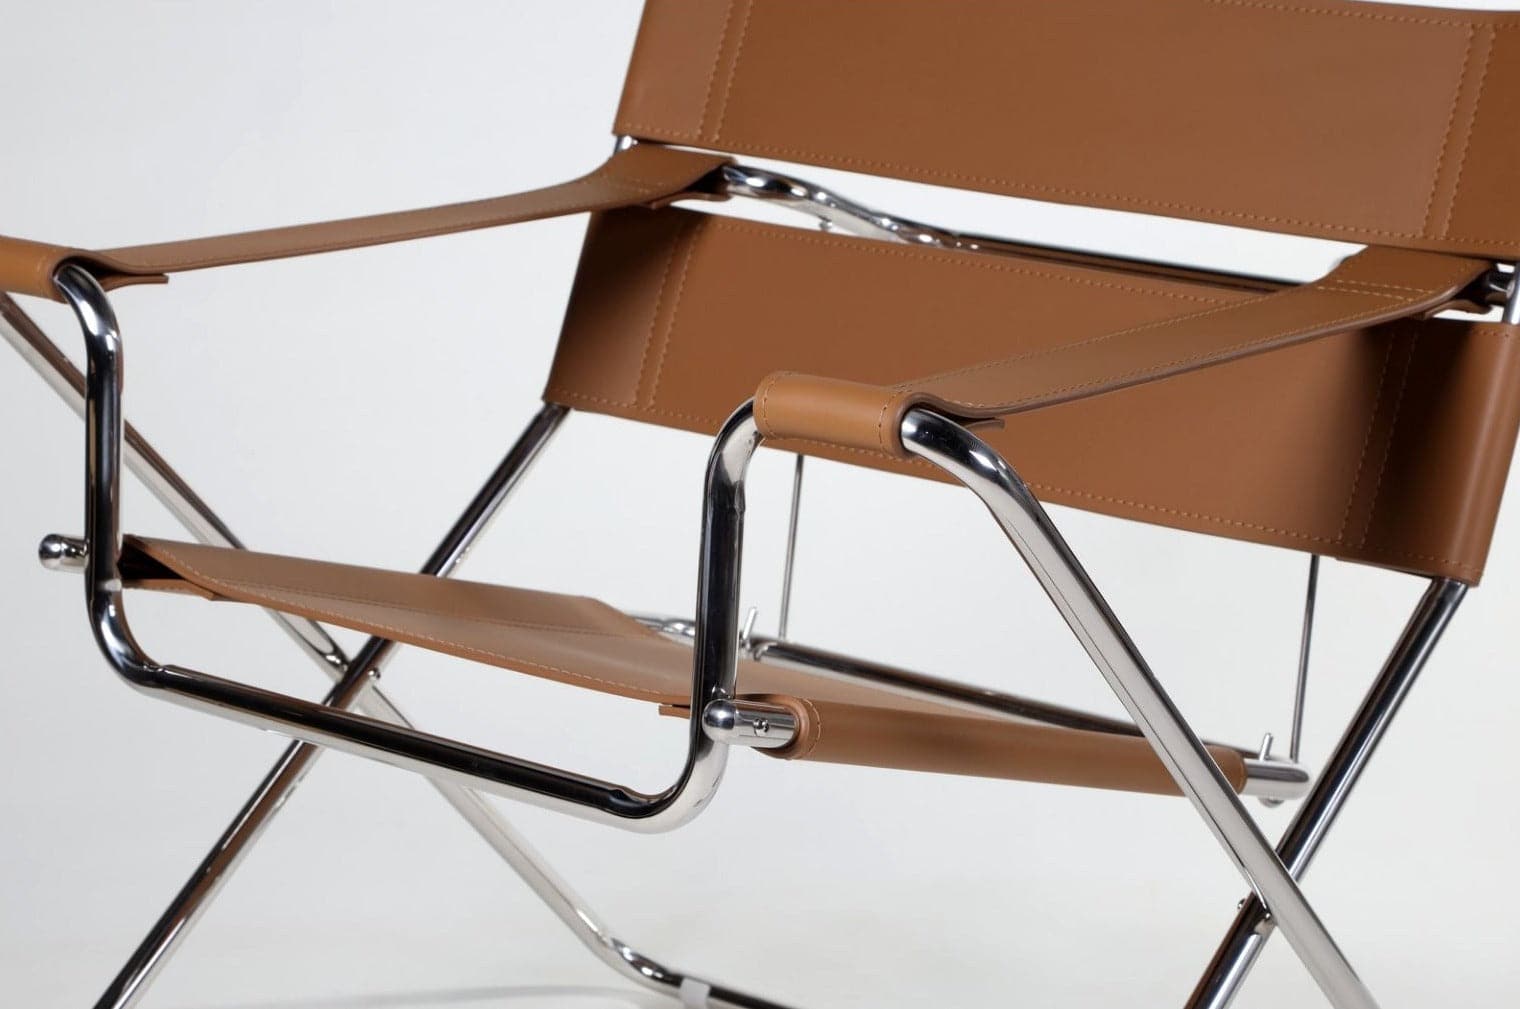 Kandinsky Lounge Chair - The Feelter